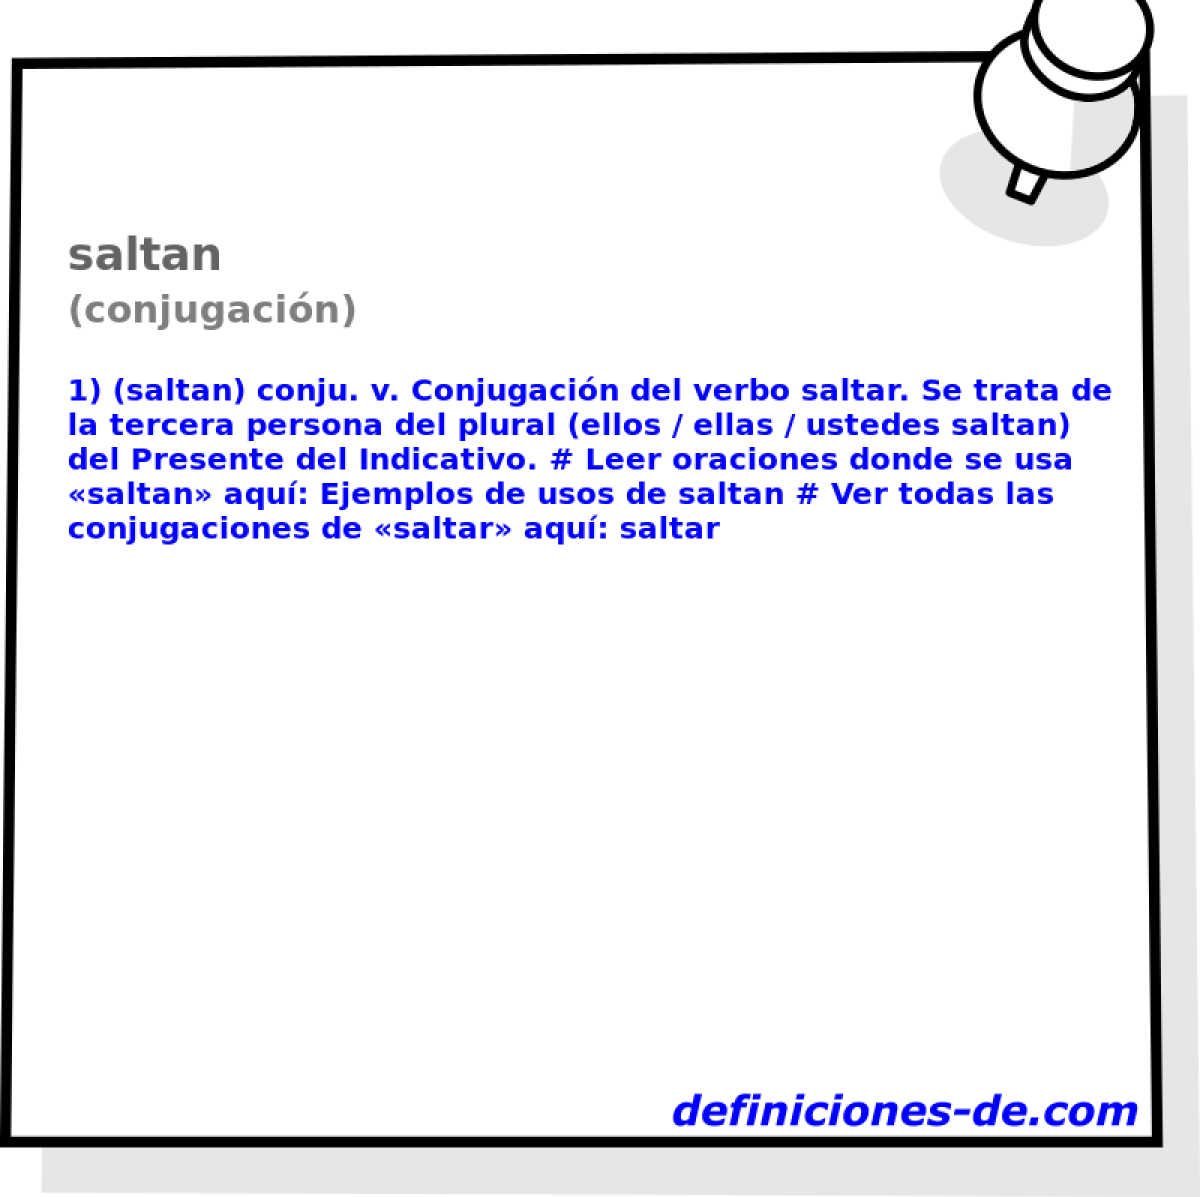 saltan (conjugacin)